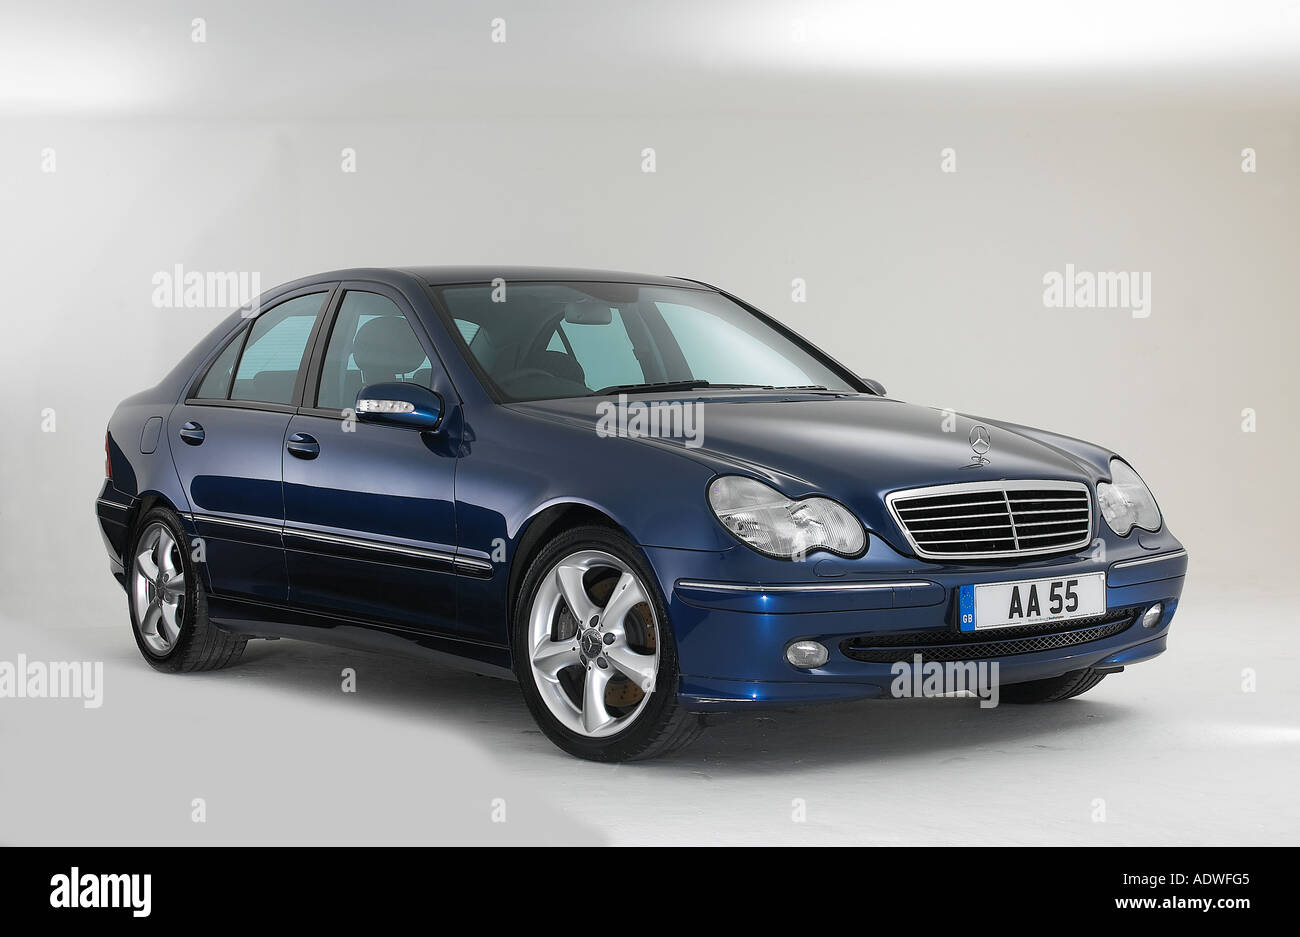 Mercedes c200 fotografías e imágenes de alta resolución - Alamy